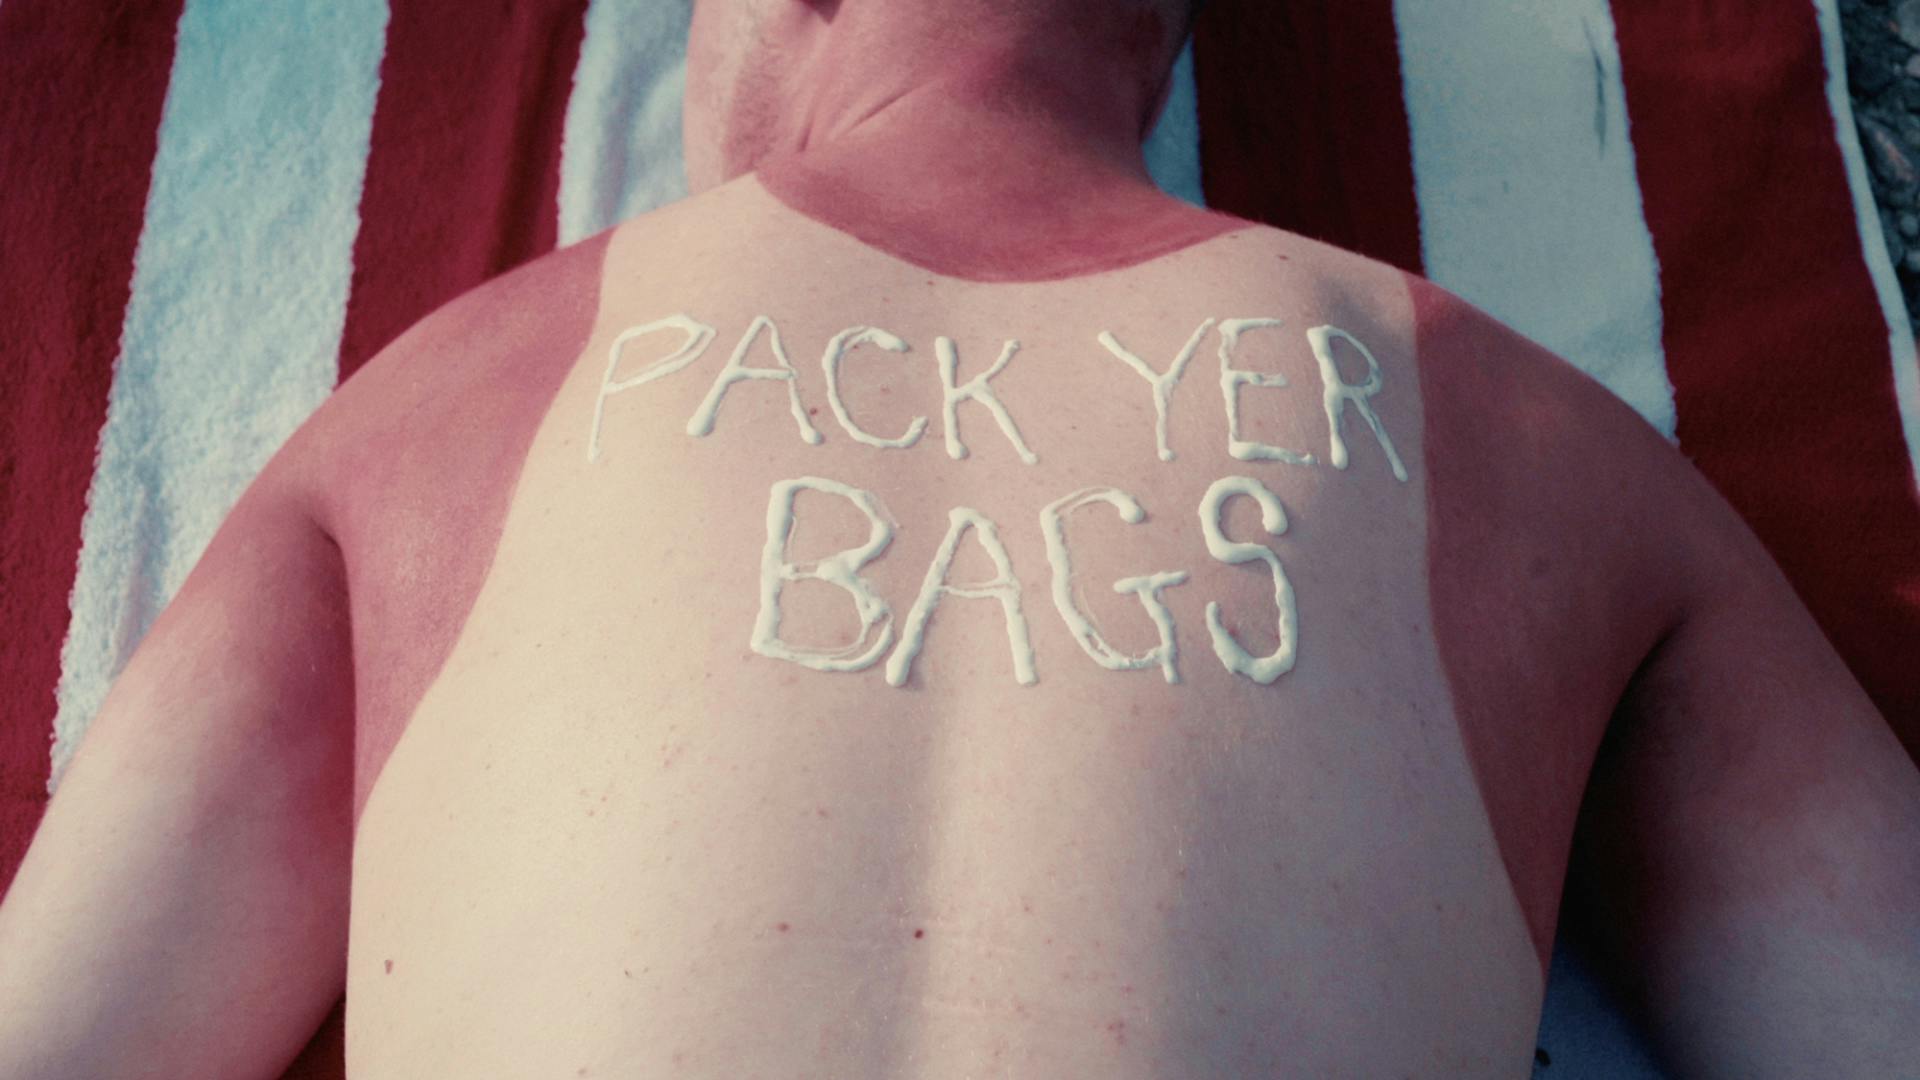 Pack Yer Bags Yorkshire Tea